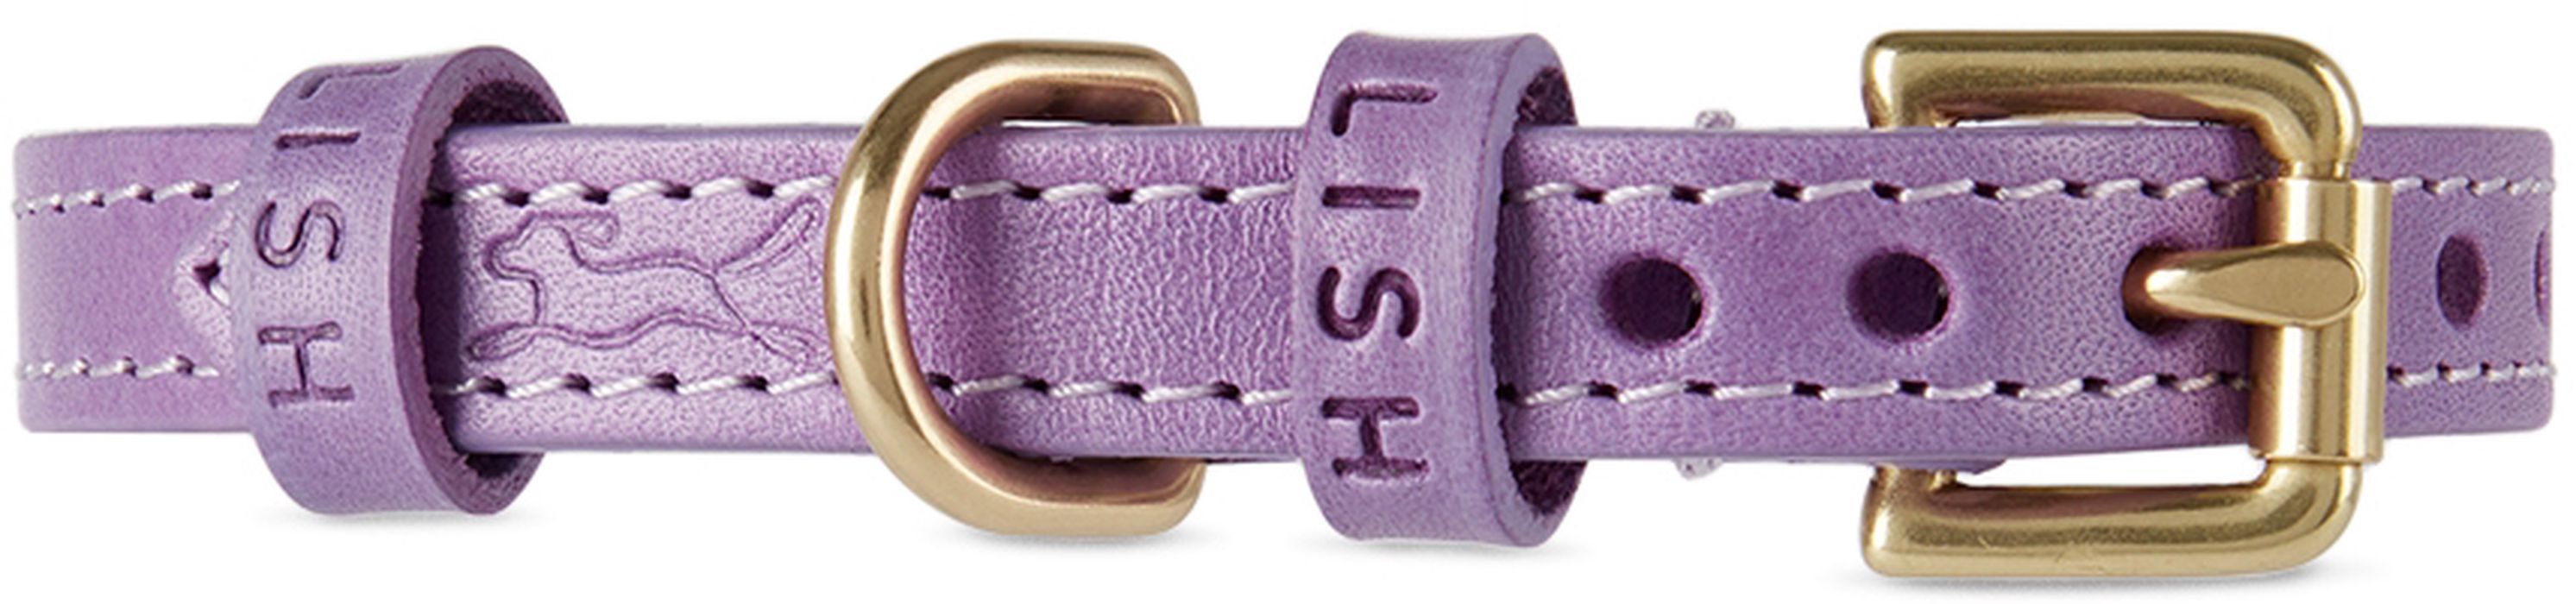 LISH Purple Small Coopers Collar